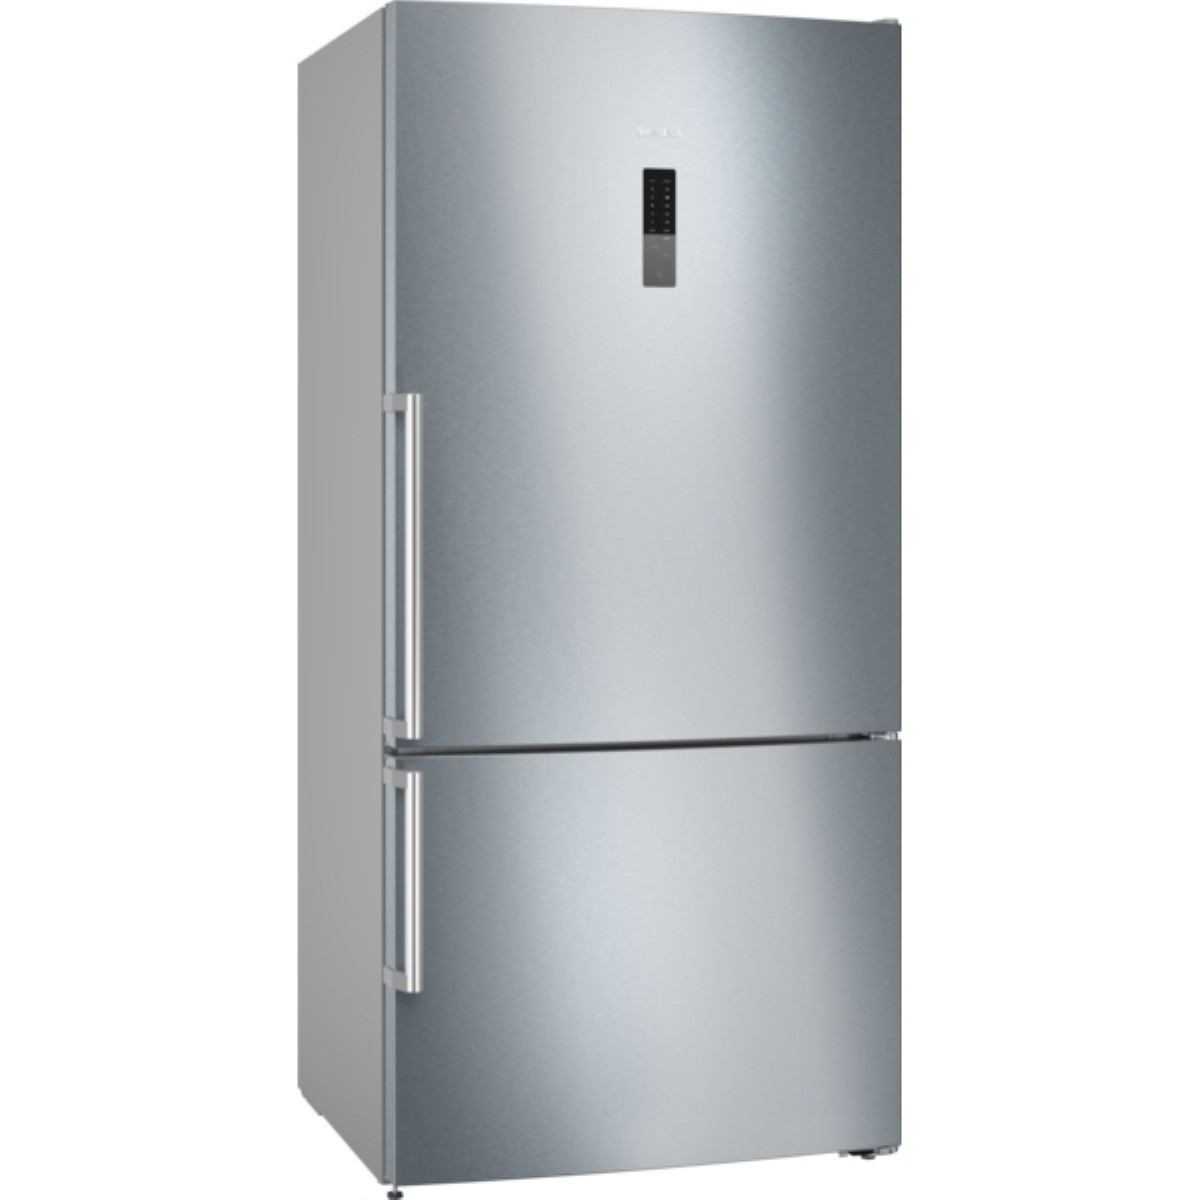 Buzdolabı | Siemens KG86NCIE0N Kombi No Frost Buzdolabı | KG86NCIE0N | Siemens iQ500 KG86NCIE0N Alttan Donduruculu Buzdolabı Inox, KG86NCIE0N | 